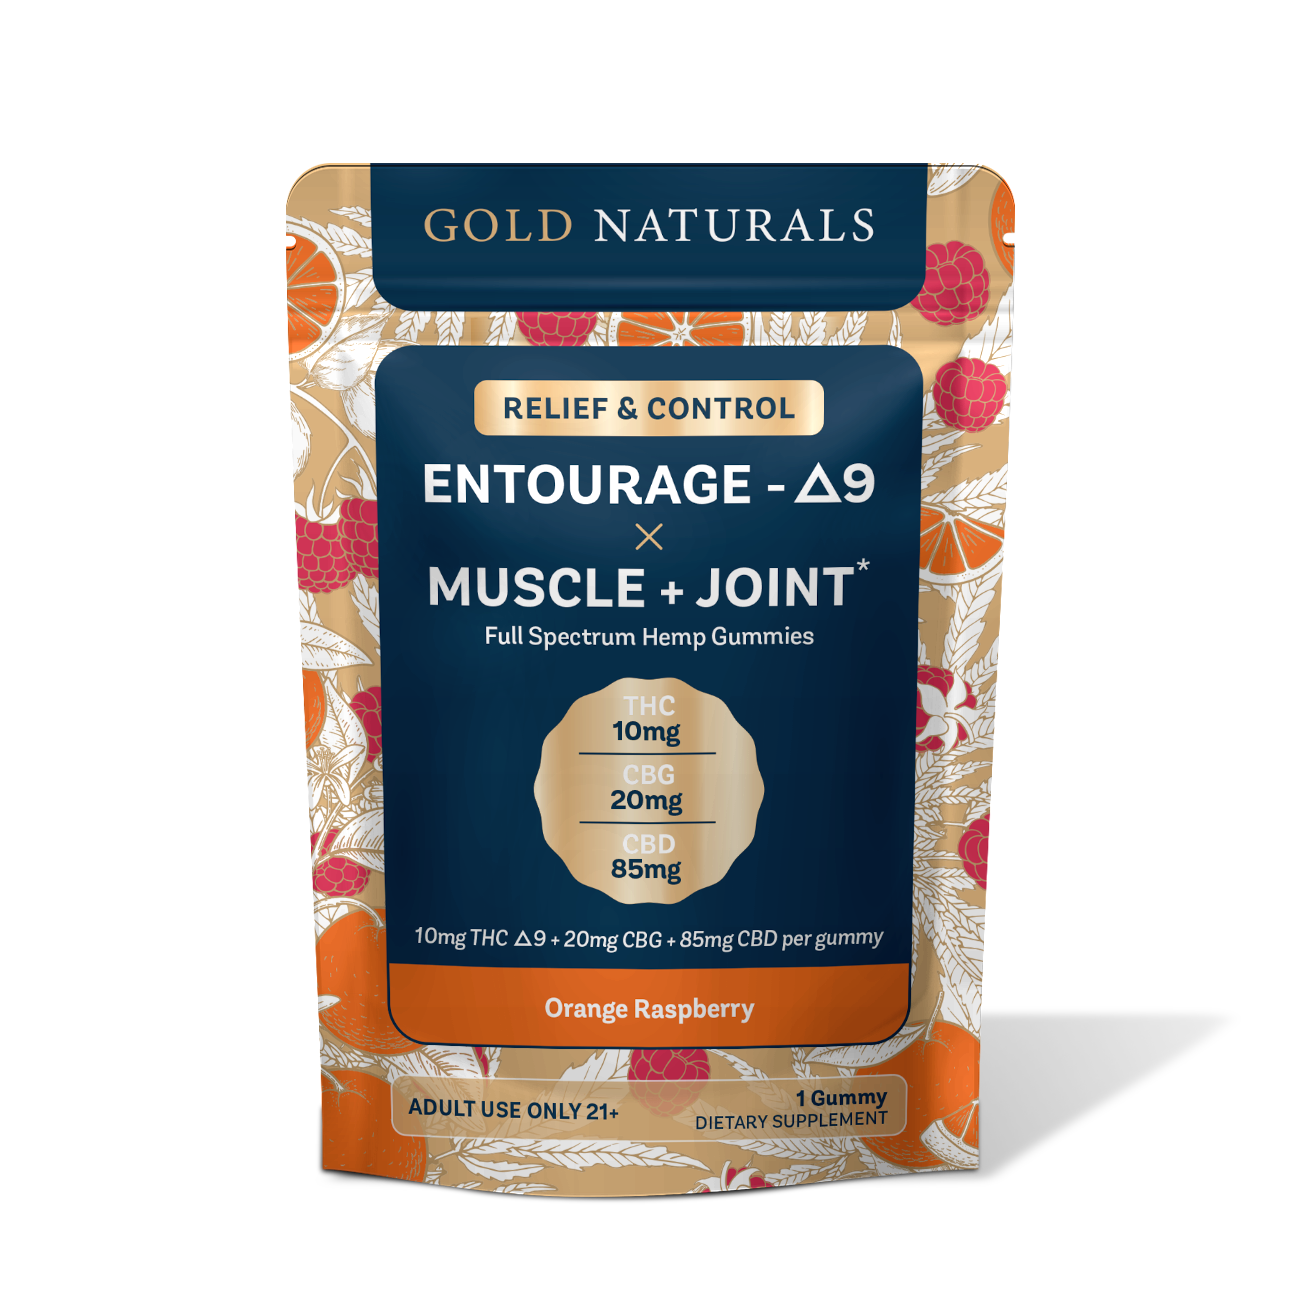 Entourage Δ9 x Muscle + Joint Gummy UTAH Compliant